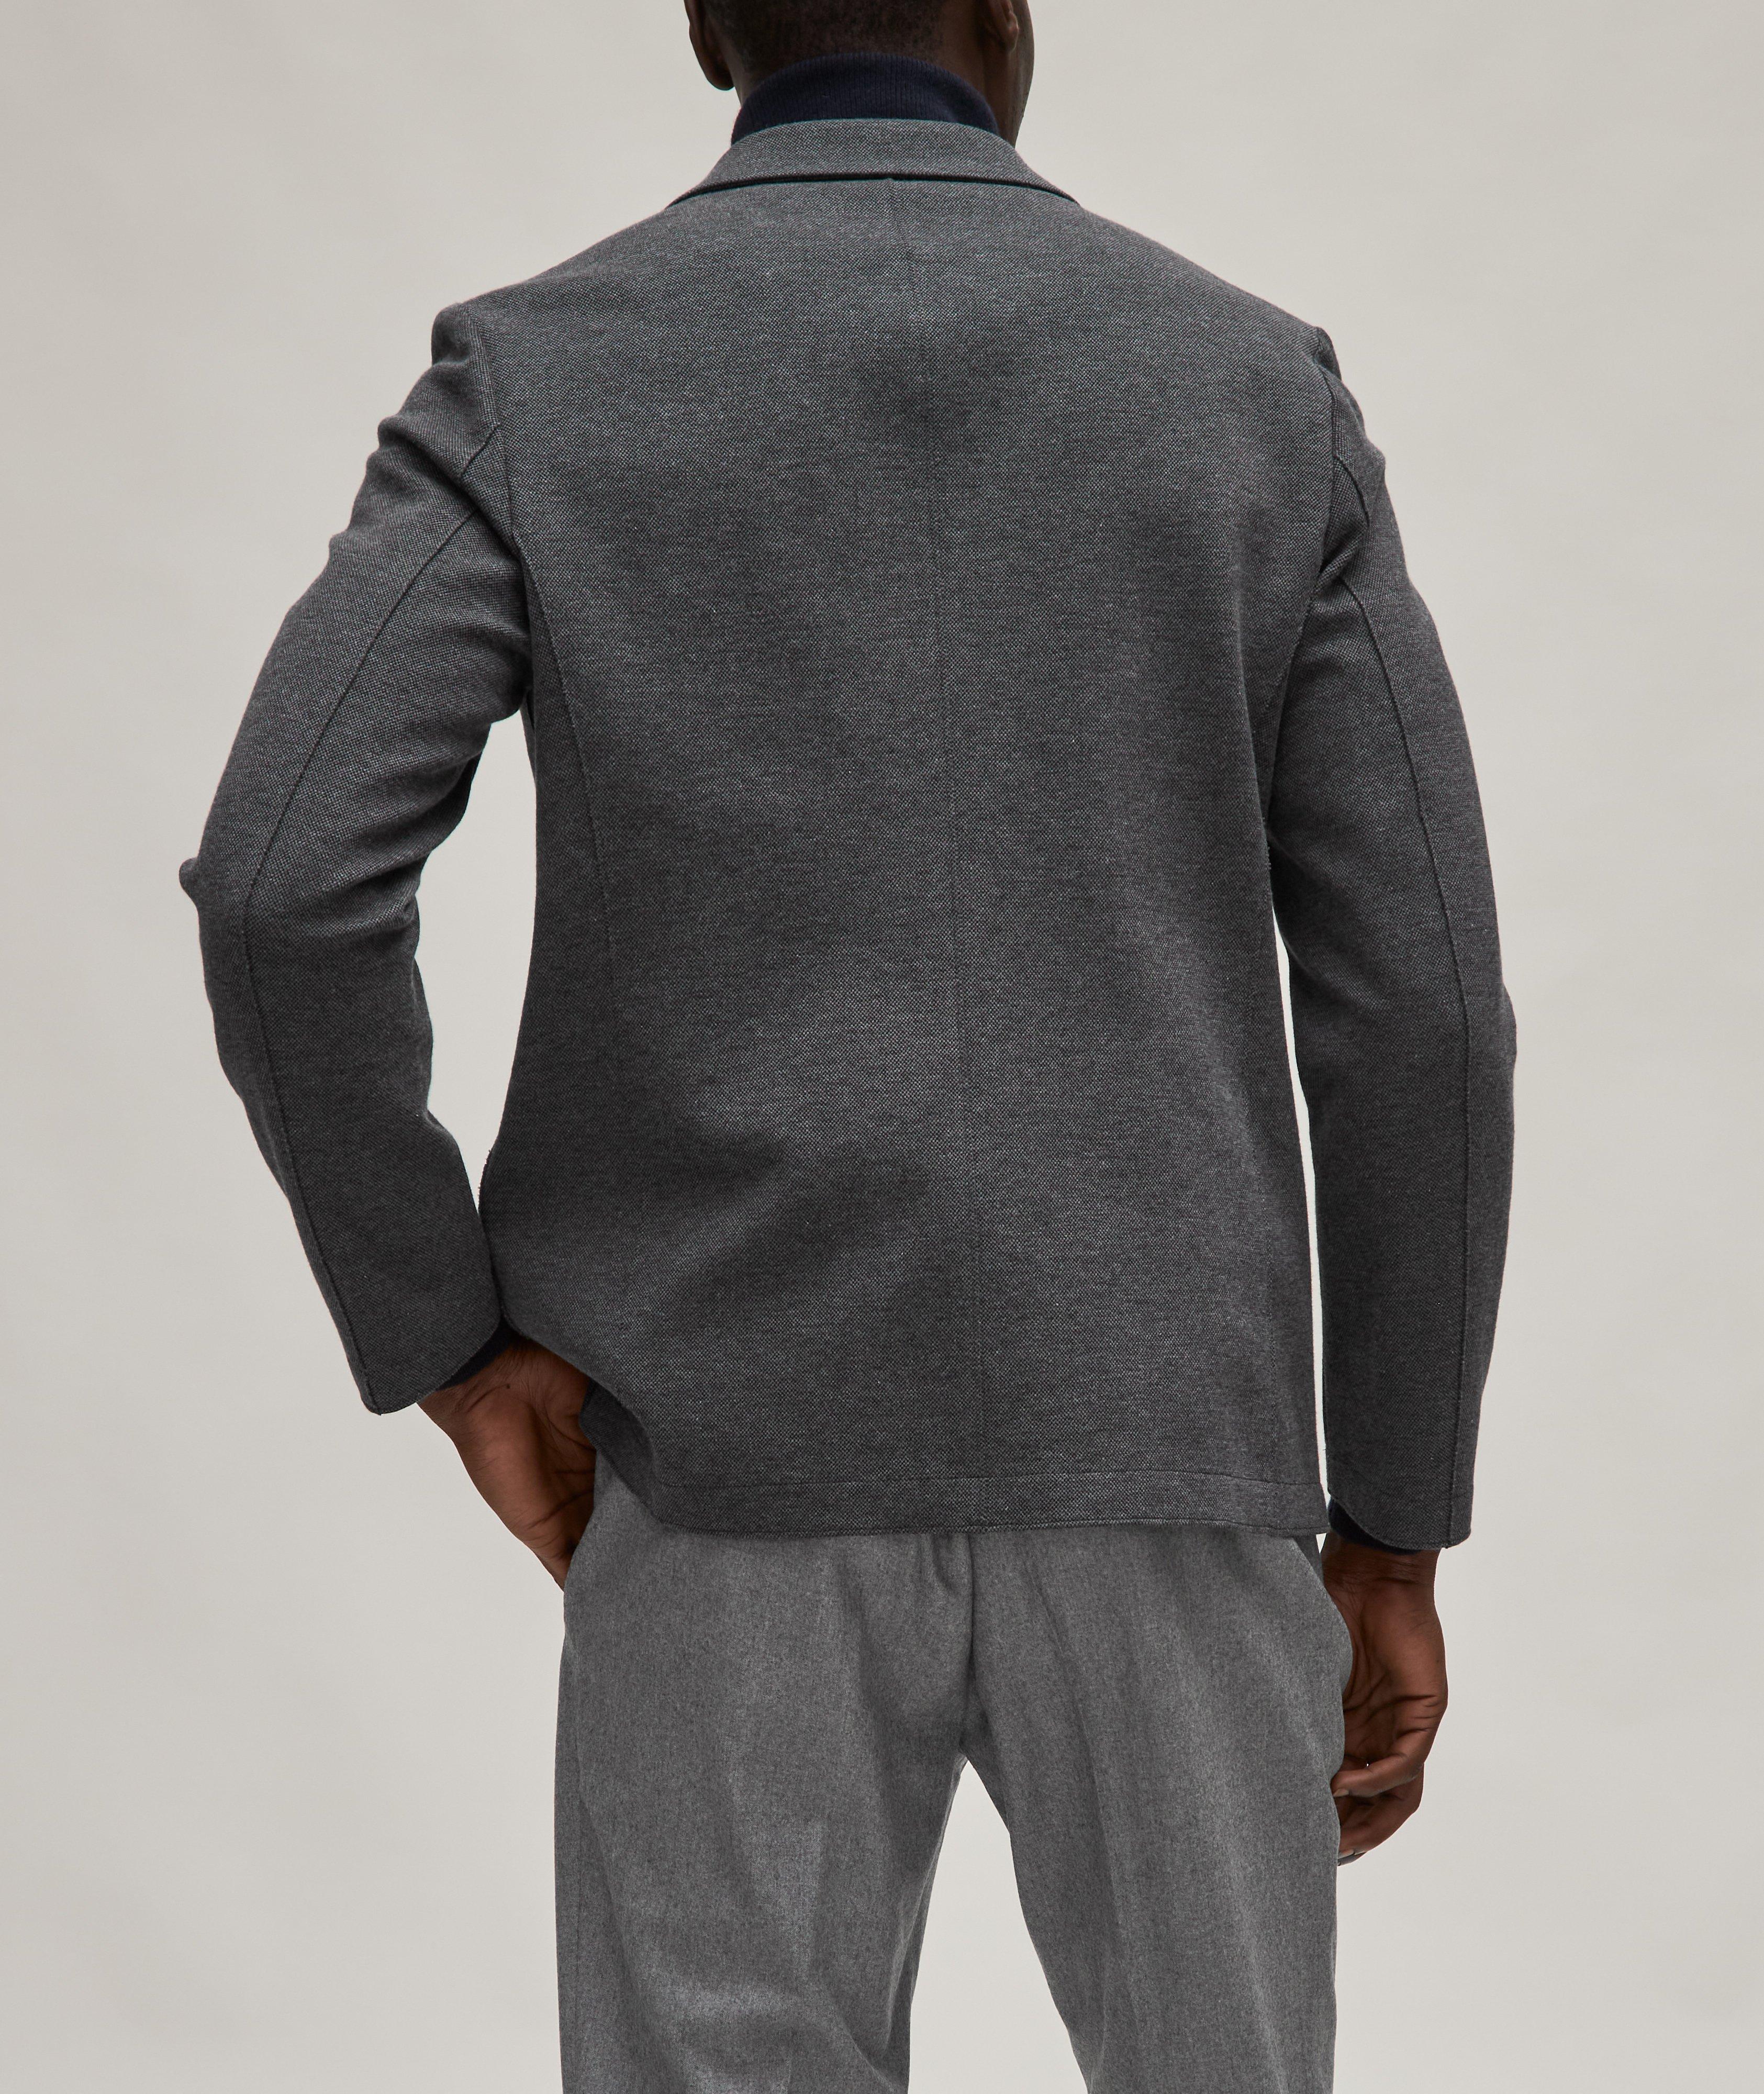 Cotton Blend Blazers & Sport Coats for Men